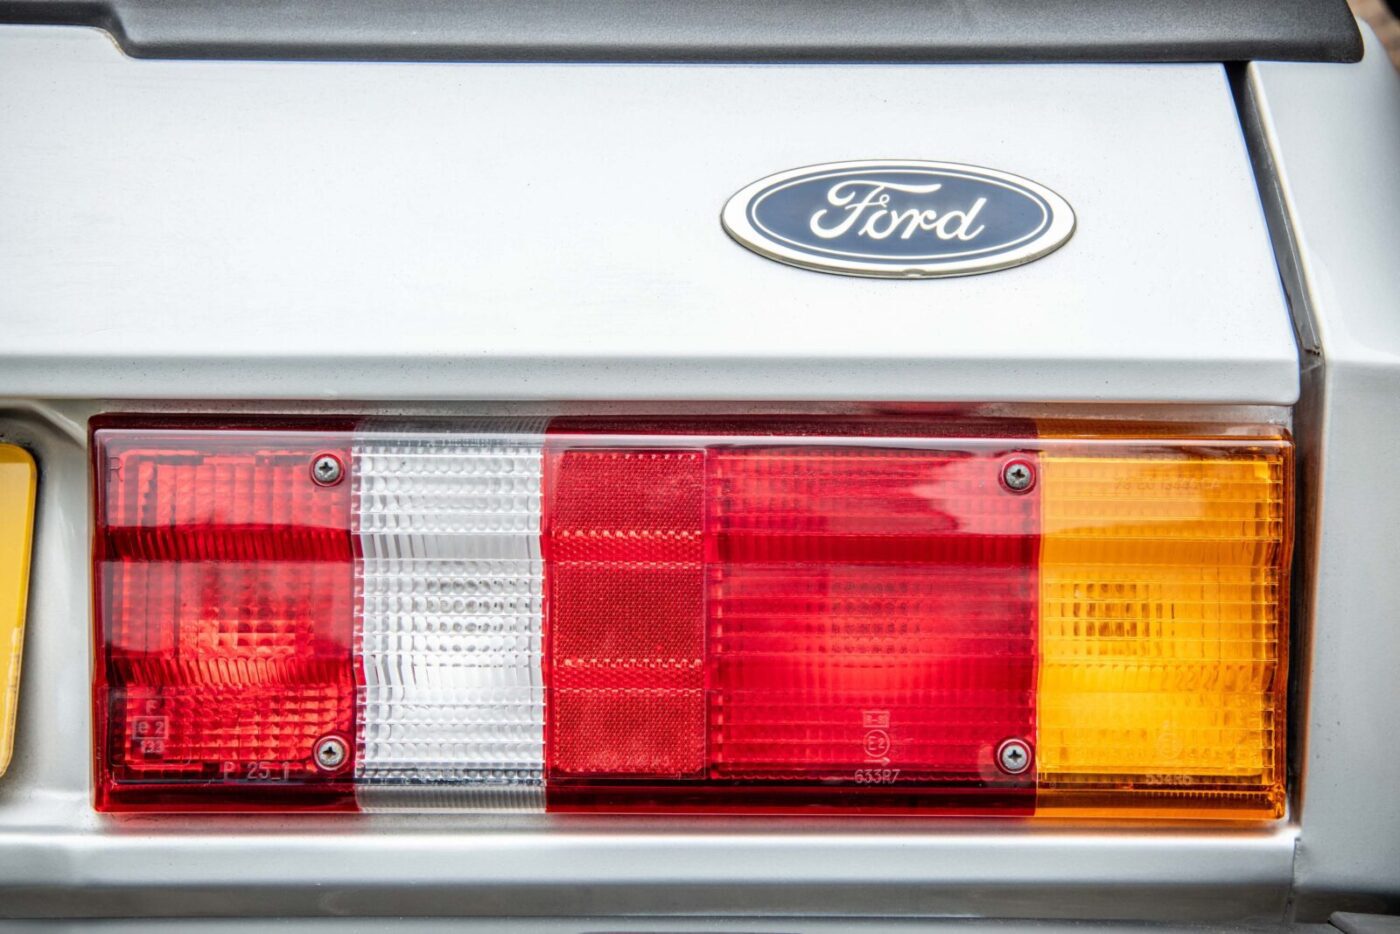 Ford Capri Laser rear light